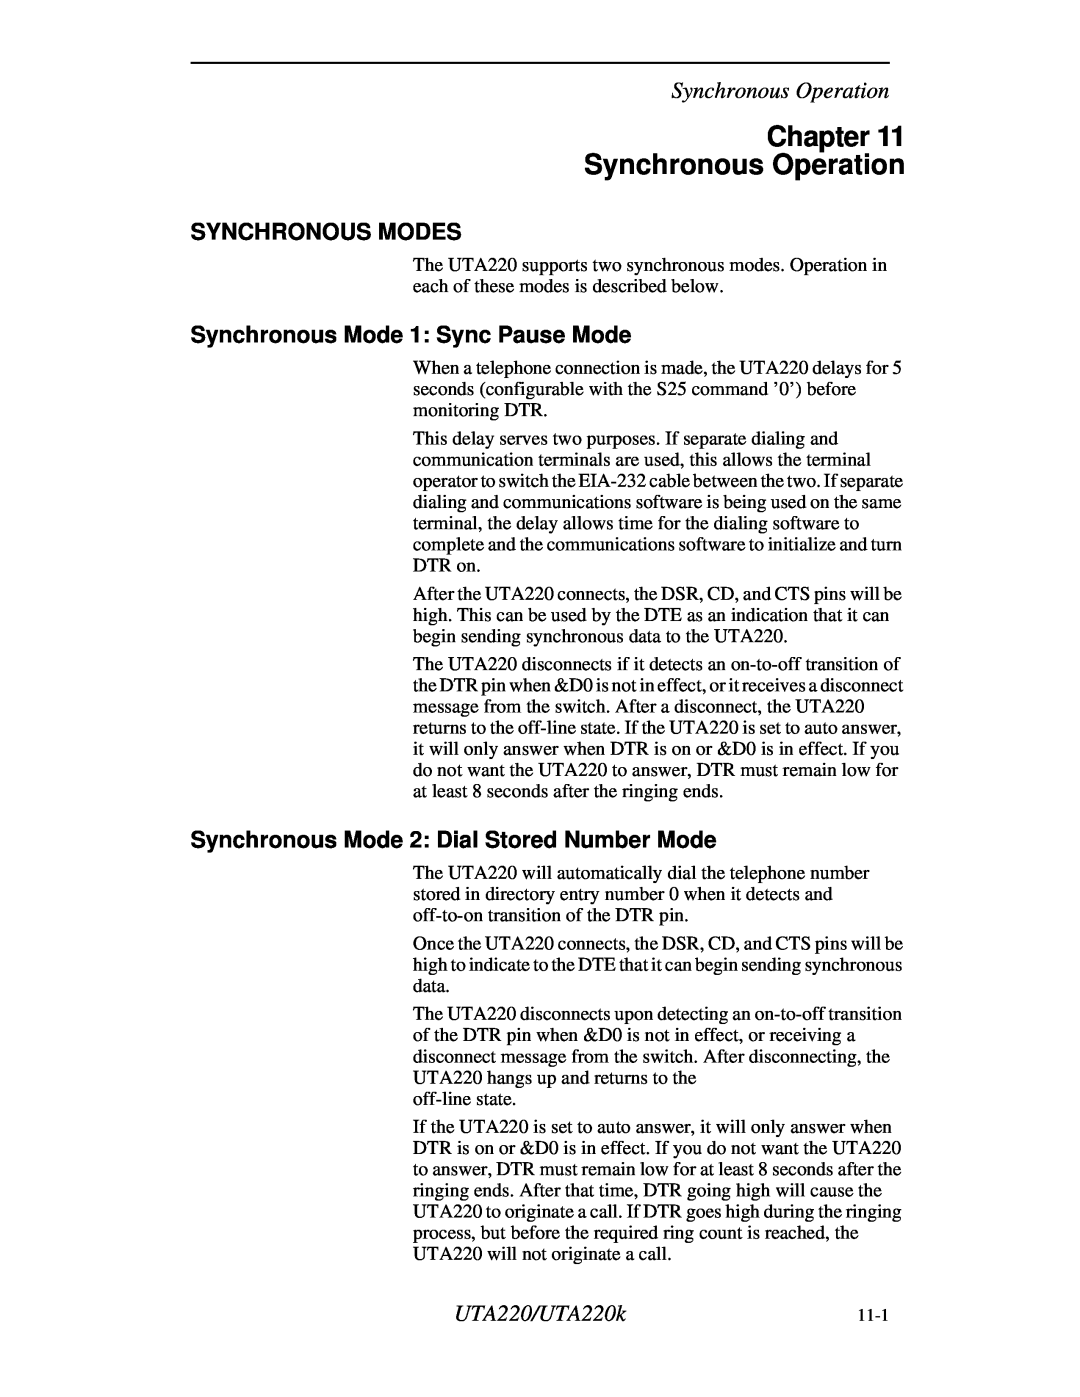 Northern UTA220/UTA220k manual Chapter Synchronous Operation, Synchronous Modes, Synchronous Mode 1 Sync Pause Mode 